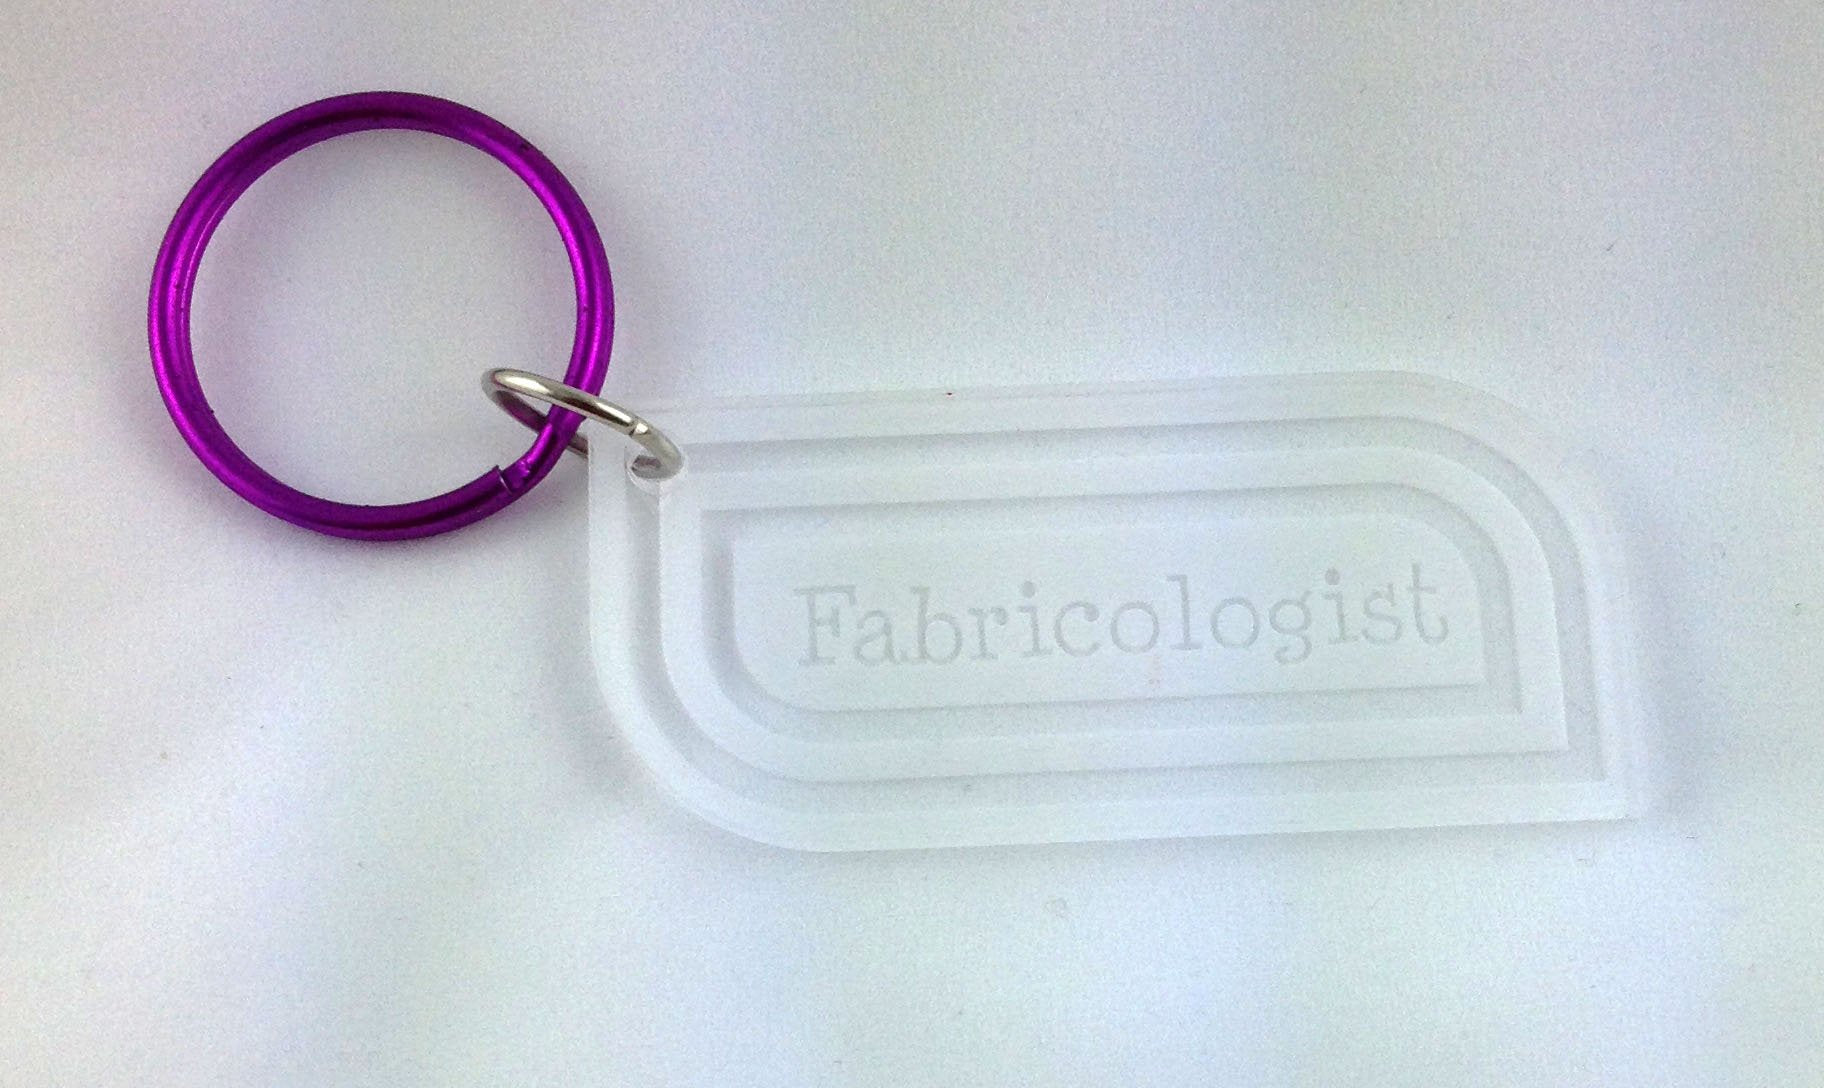 Key Ring Fabricologist from Fabric Fanatics